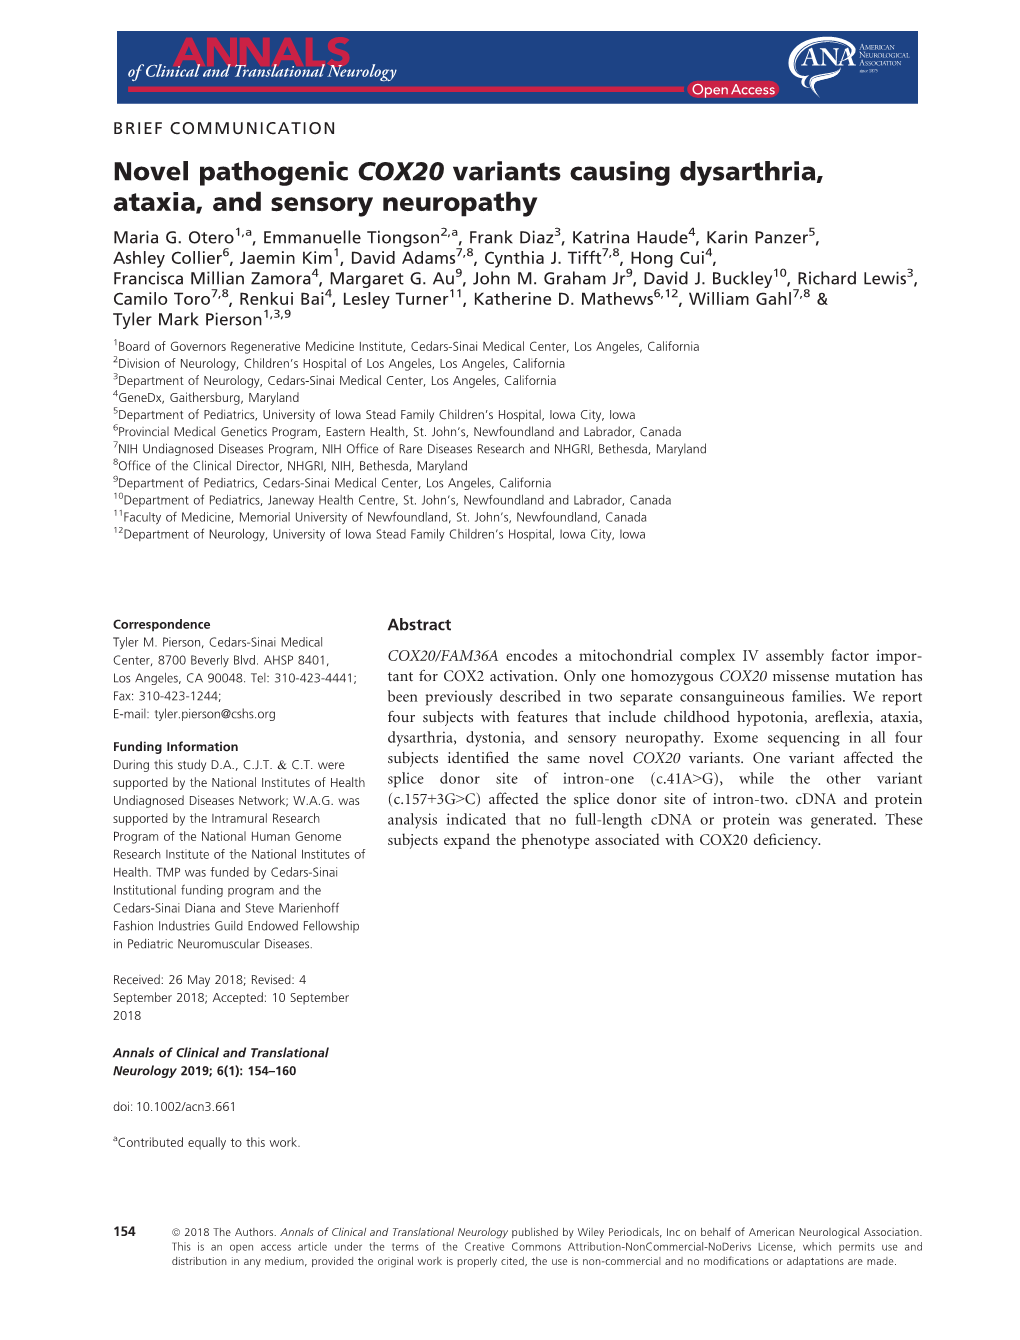 Novel Pathogenic COX20 Variants Causing Dysarthria, Ataxia, and Sensory Neuropathy Maria G